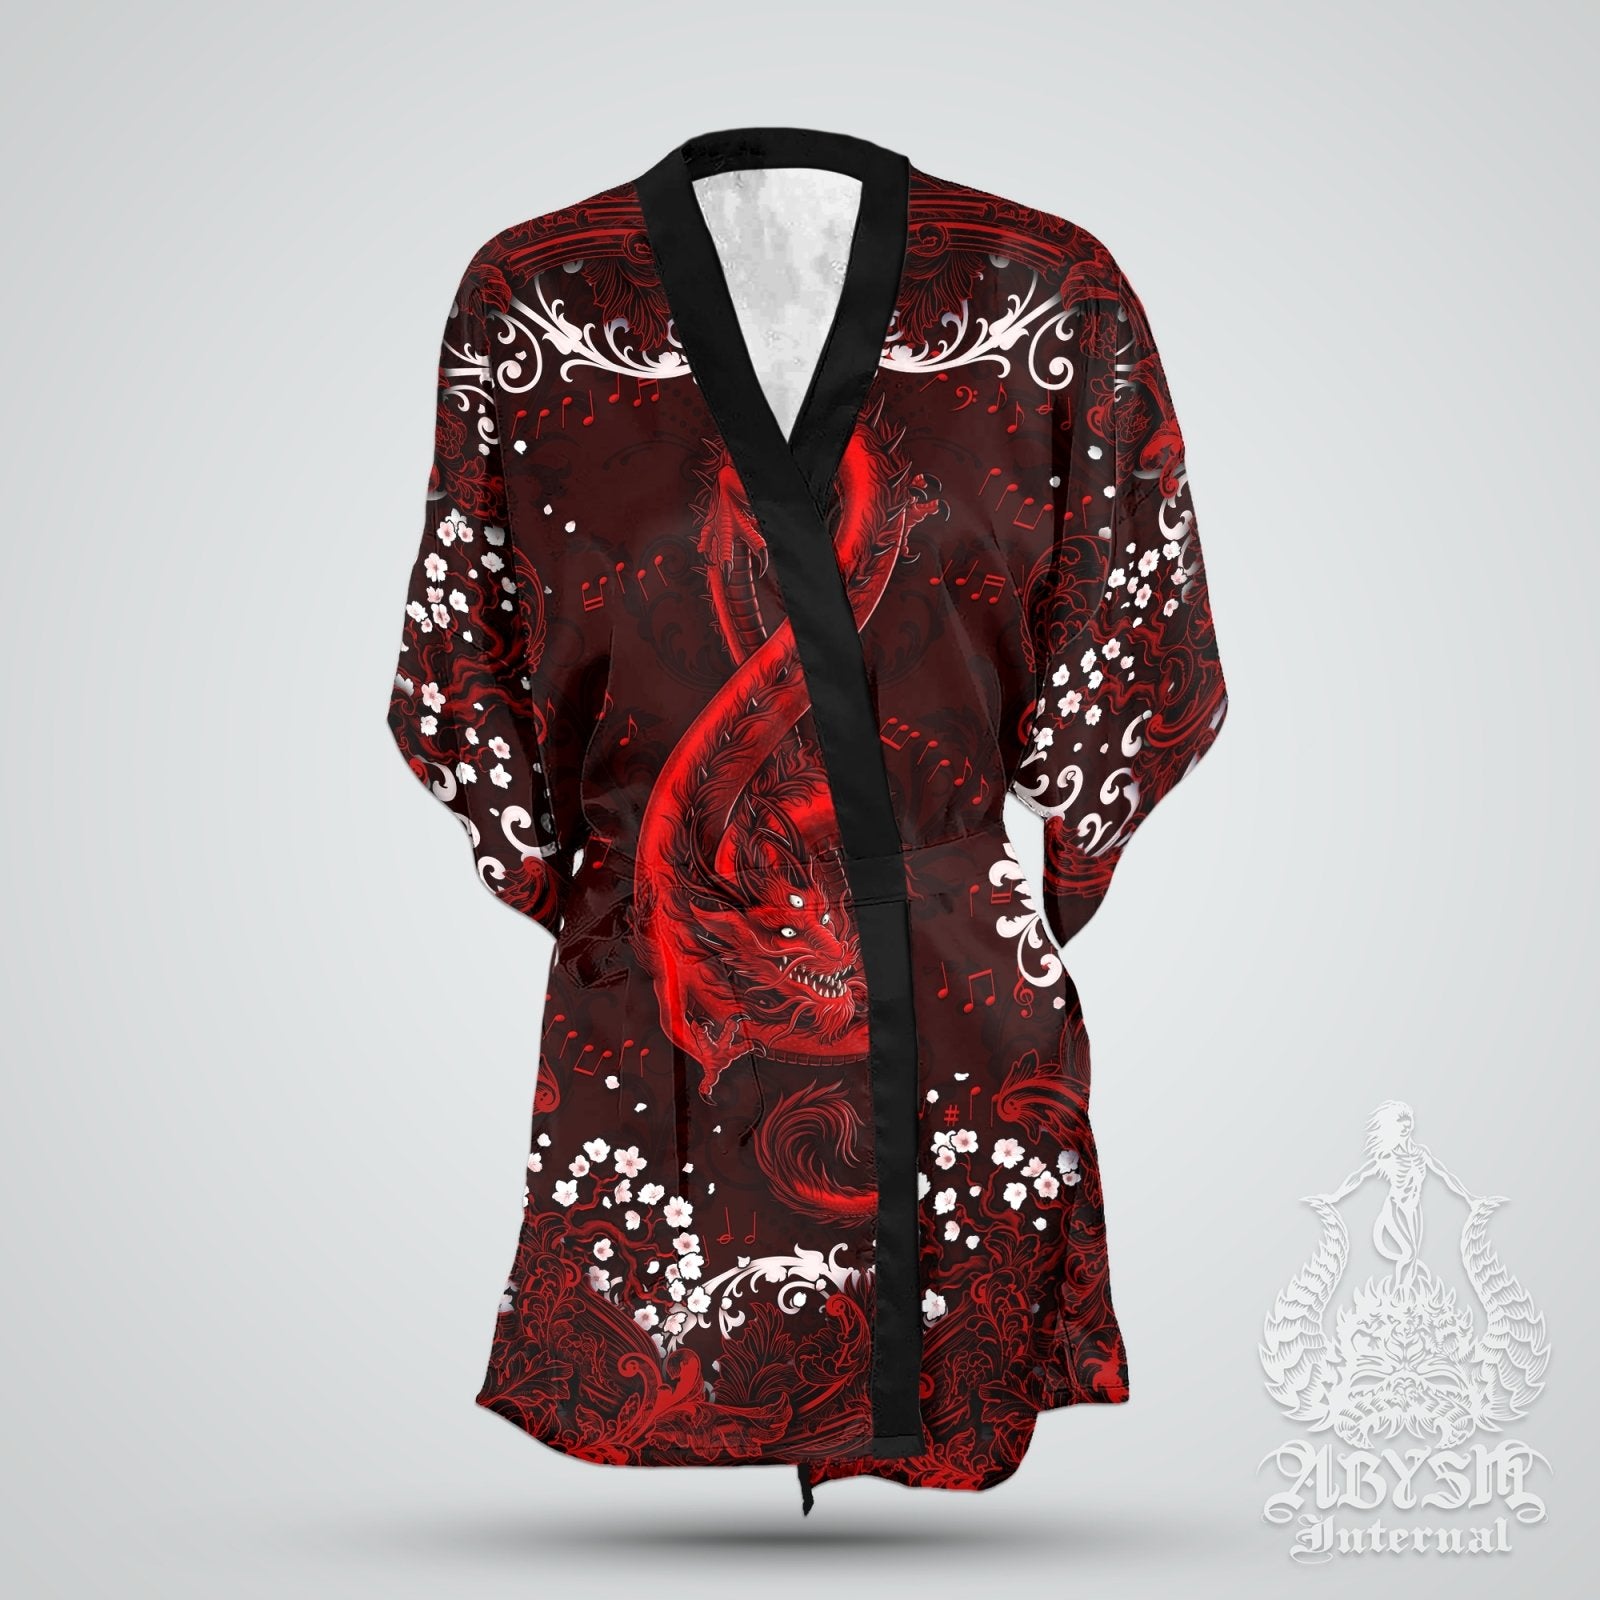 Dragon Kimono, Dressing Robe, Open Shirt, Music Festival Outfit, Alternative Clothing, Gothic Summer Streetwear, Unisex - Bloody Black Goth - Abysm Internal